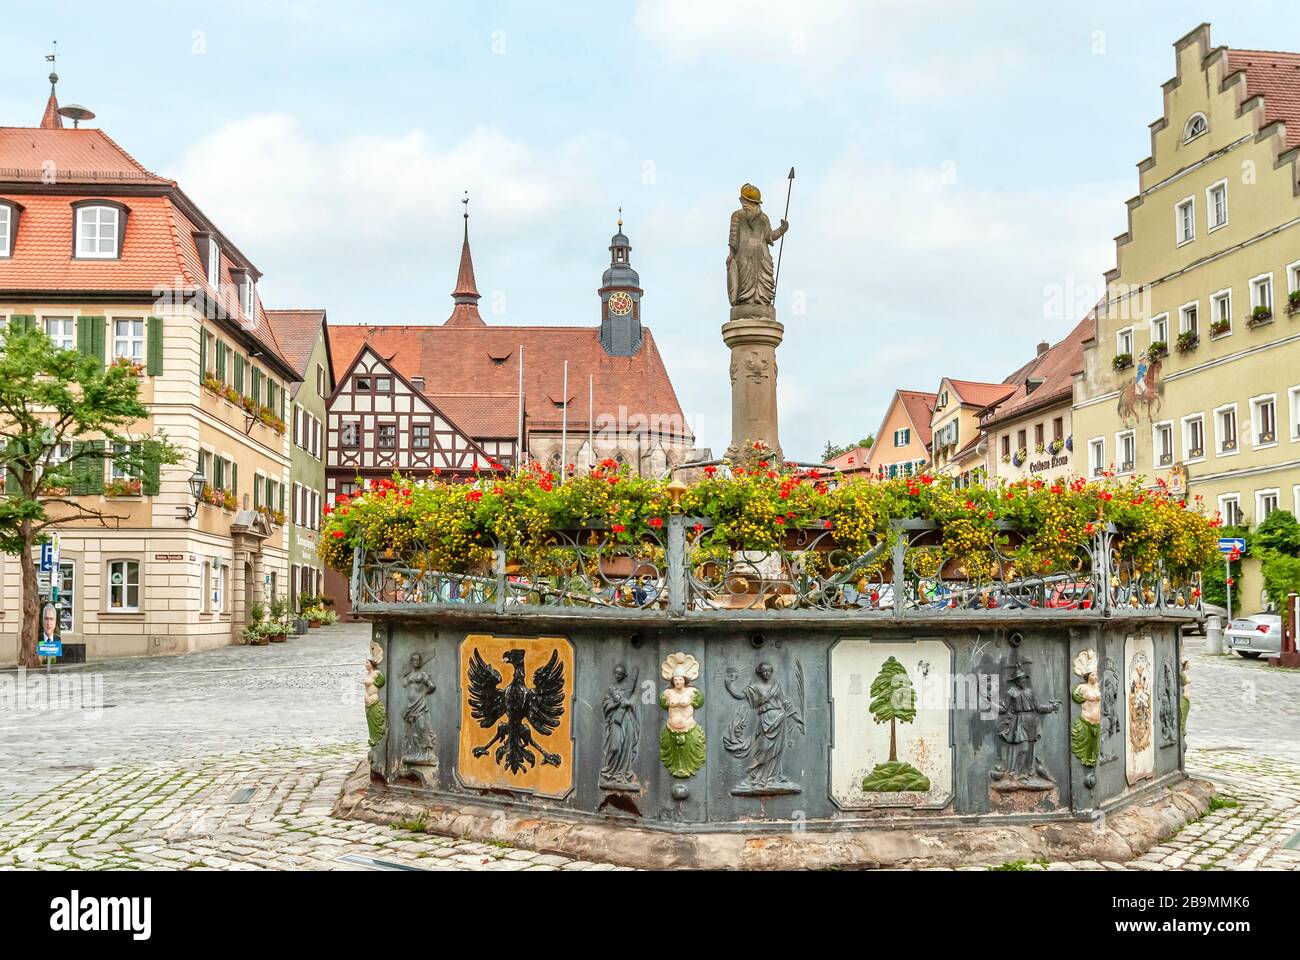 Röhrenbrunnen al mercato di Feuchtwangen, Baviera, Germania meridionale Foto Stock